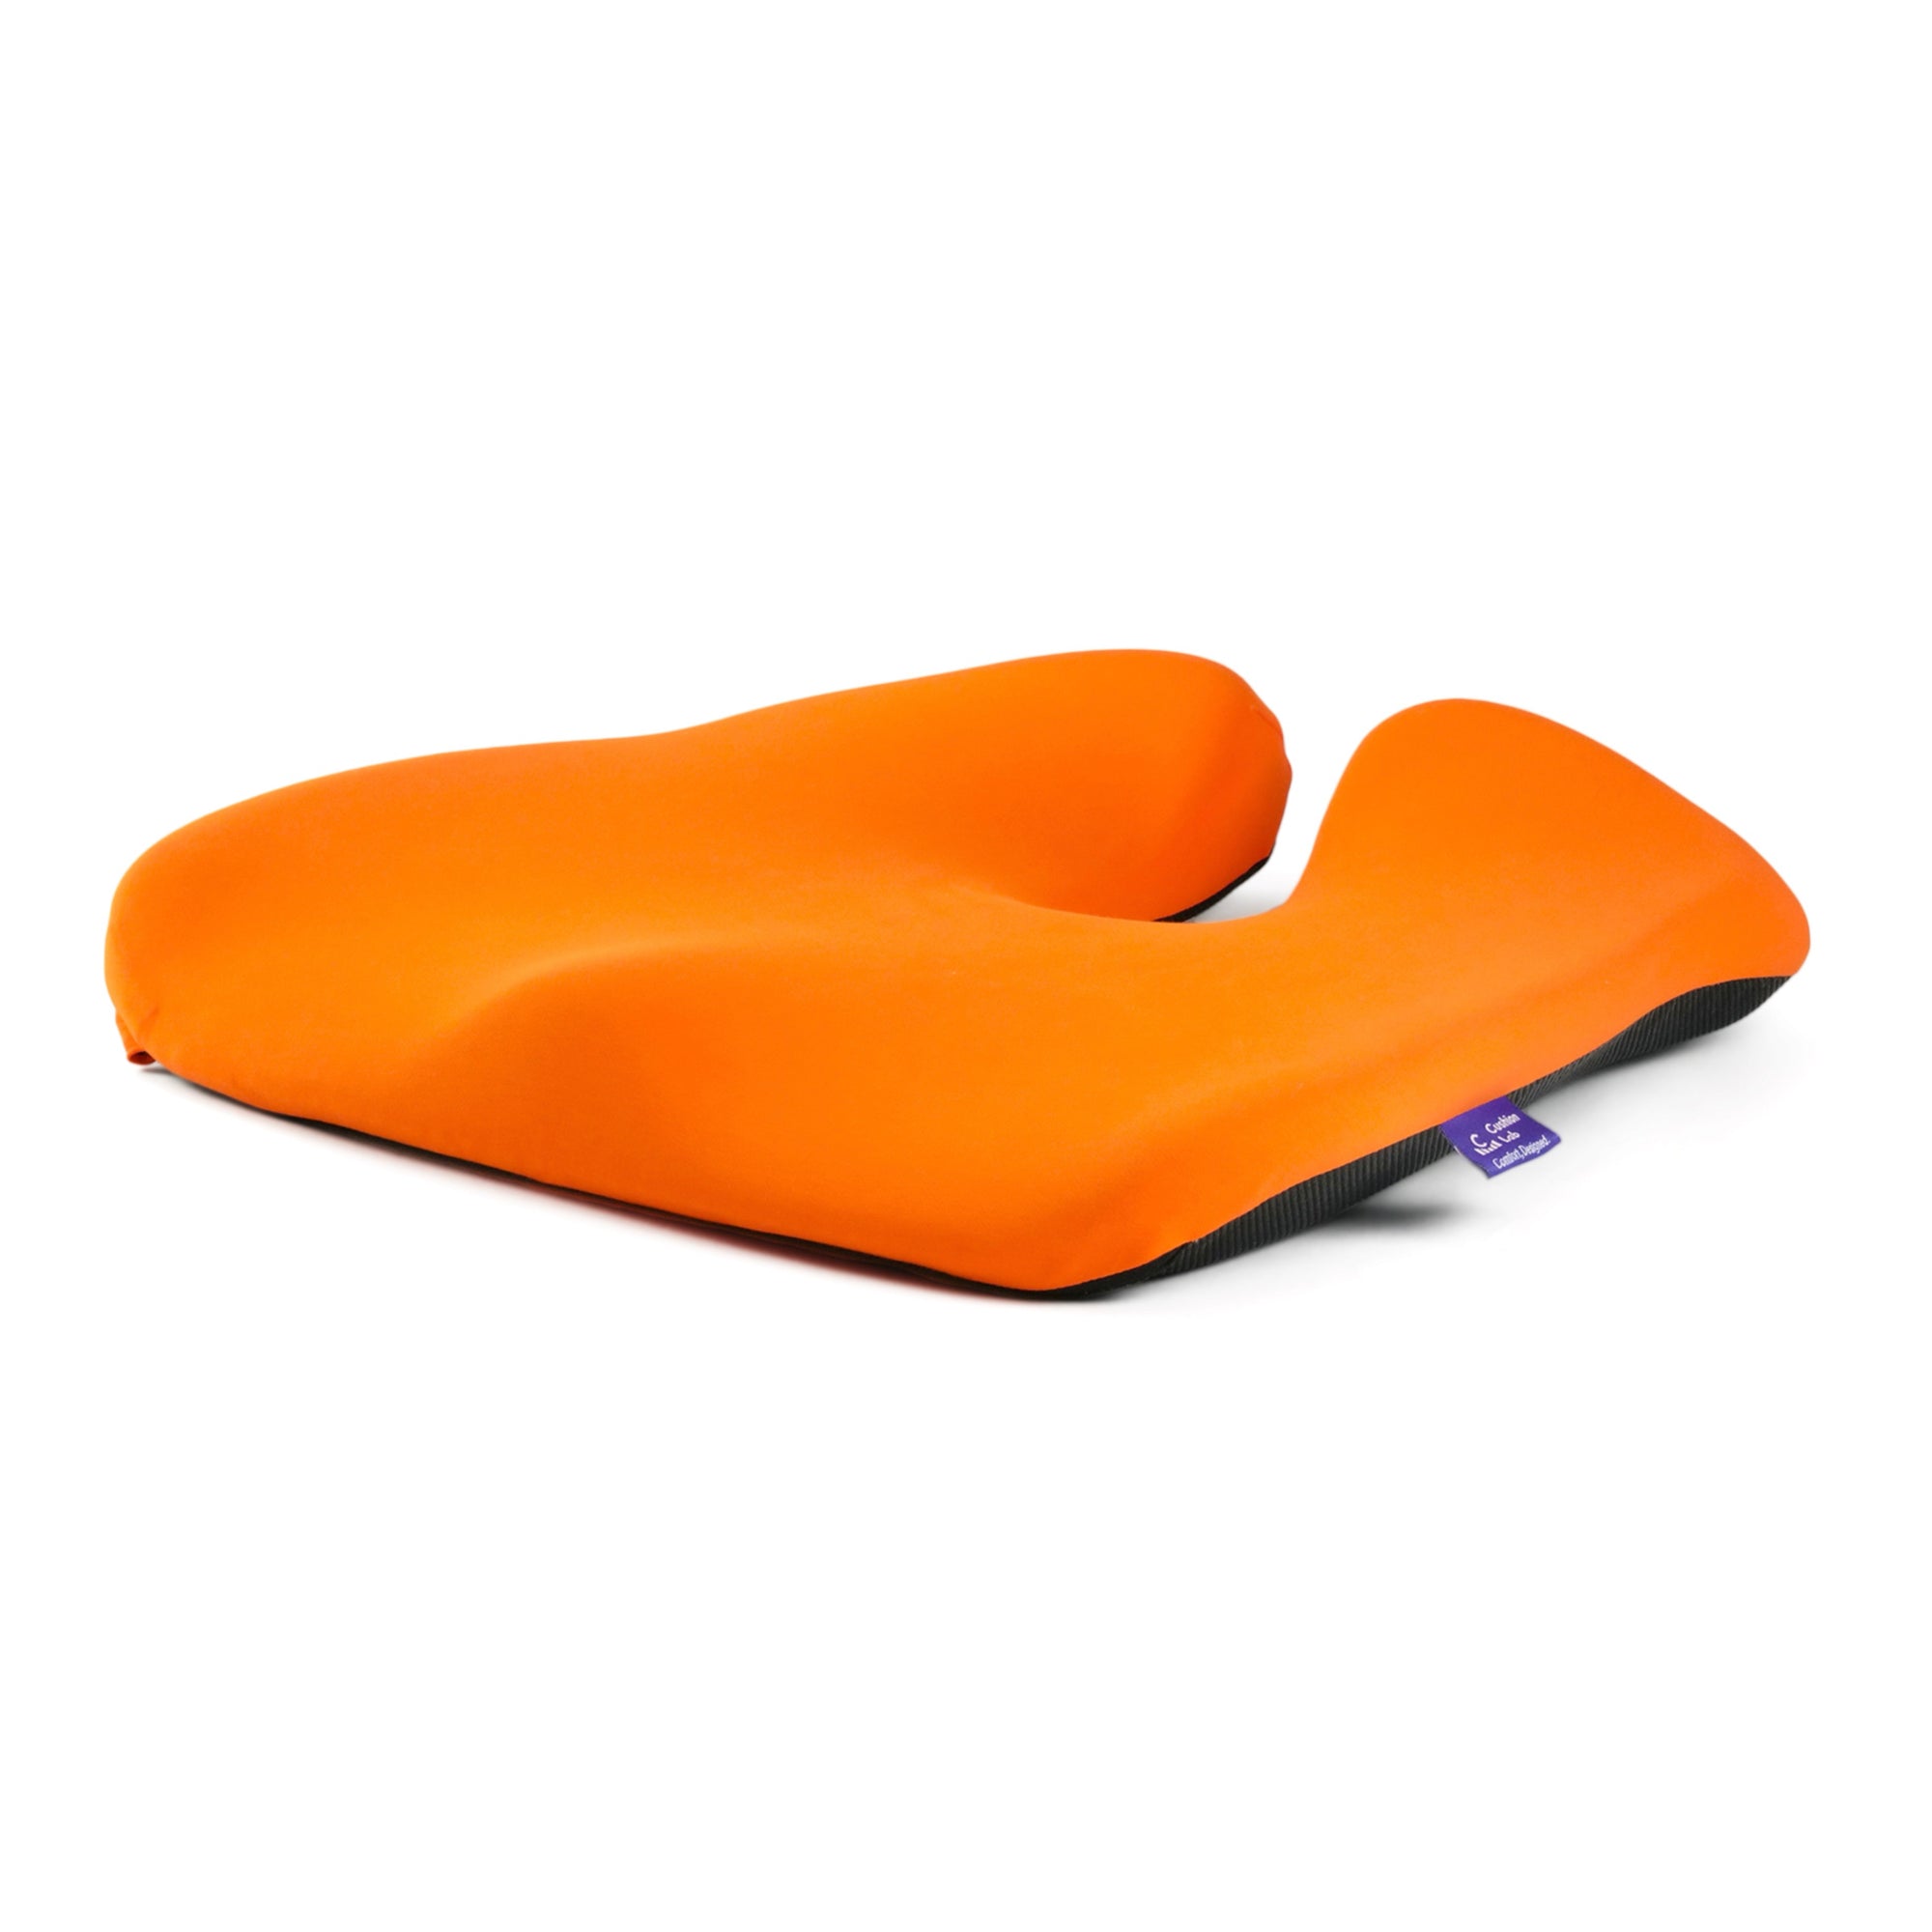 EcoNour Car Pressure Relief Seat Cushion for Sciatica Pain Relief, Anti-Slip